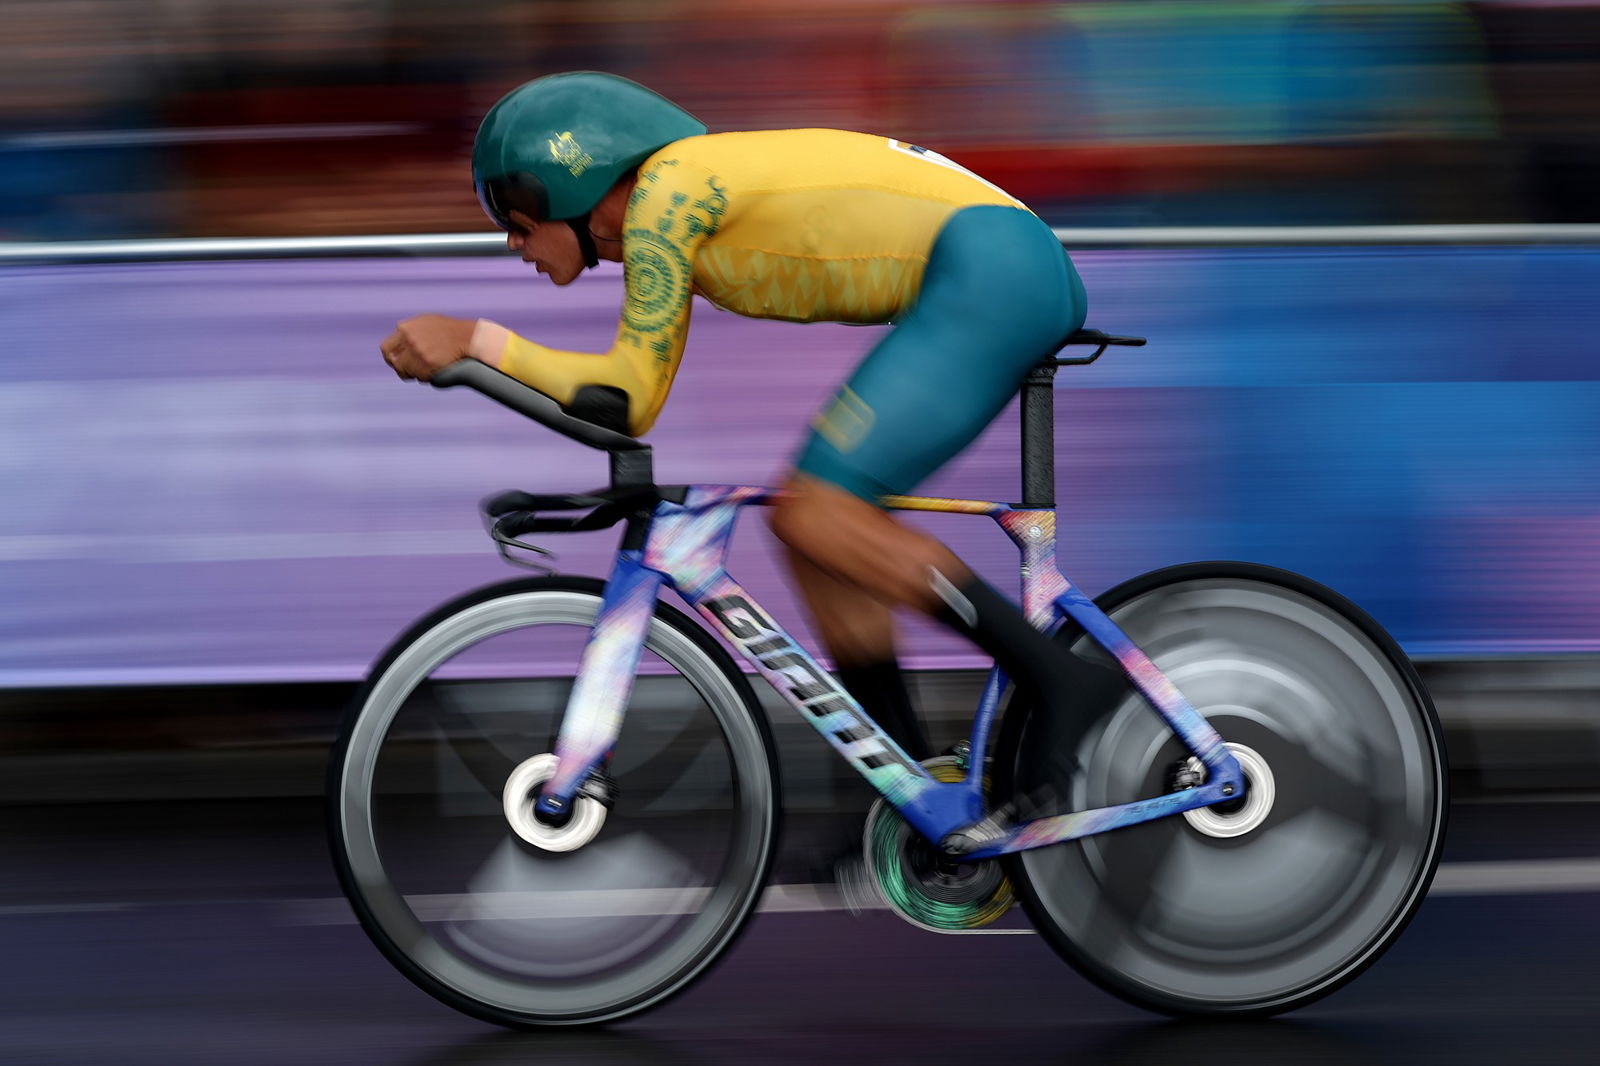 A road cyclist wearing an Australian uniform competing.